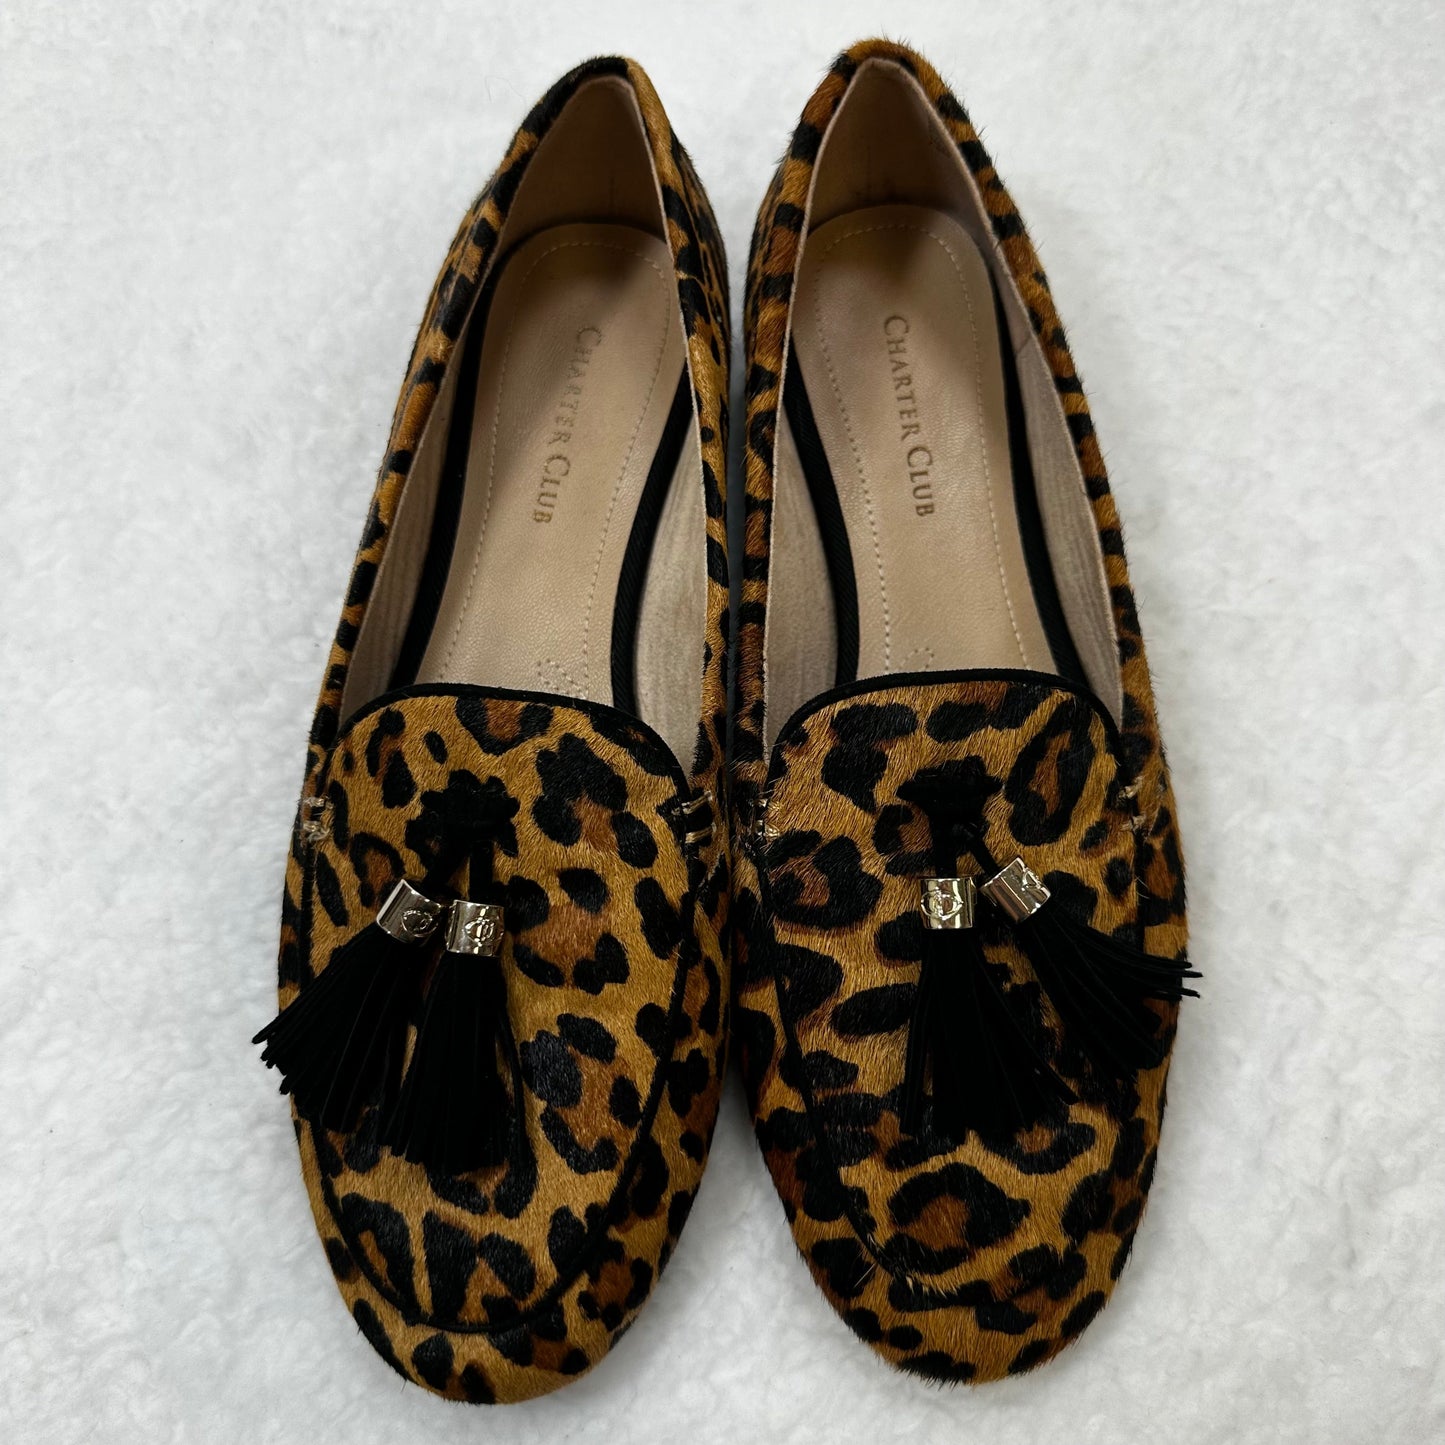 Leopard Print Shoes Flats Ballet Charter Club O, Size 7.5